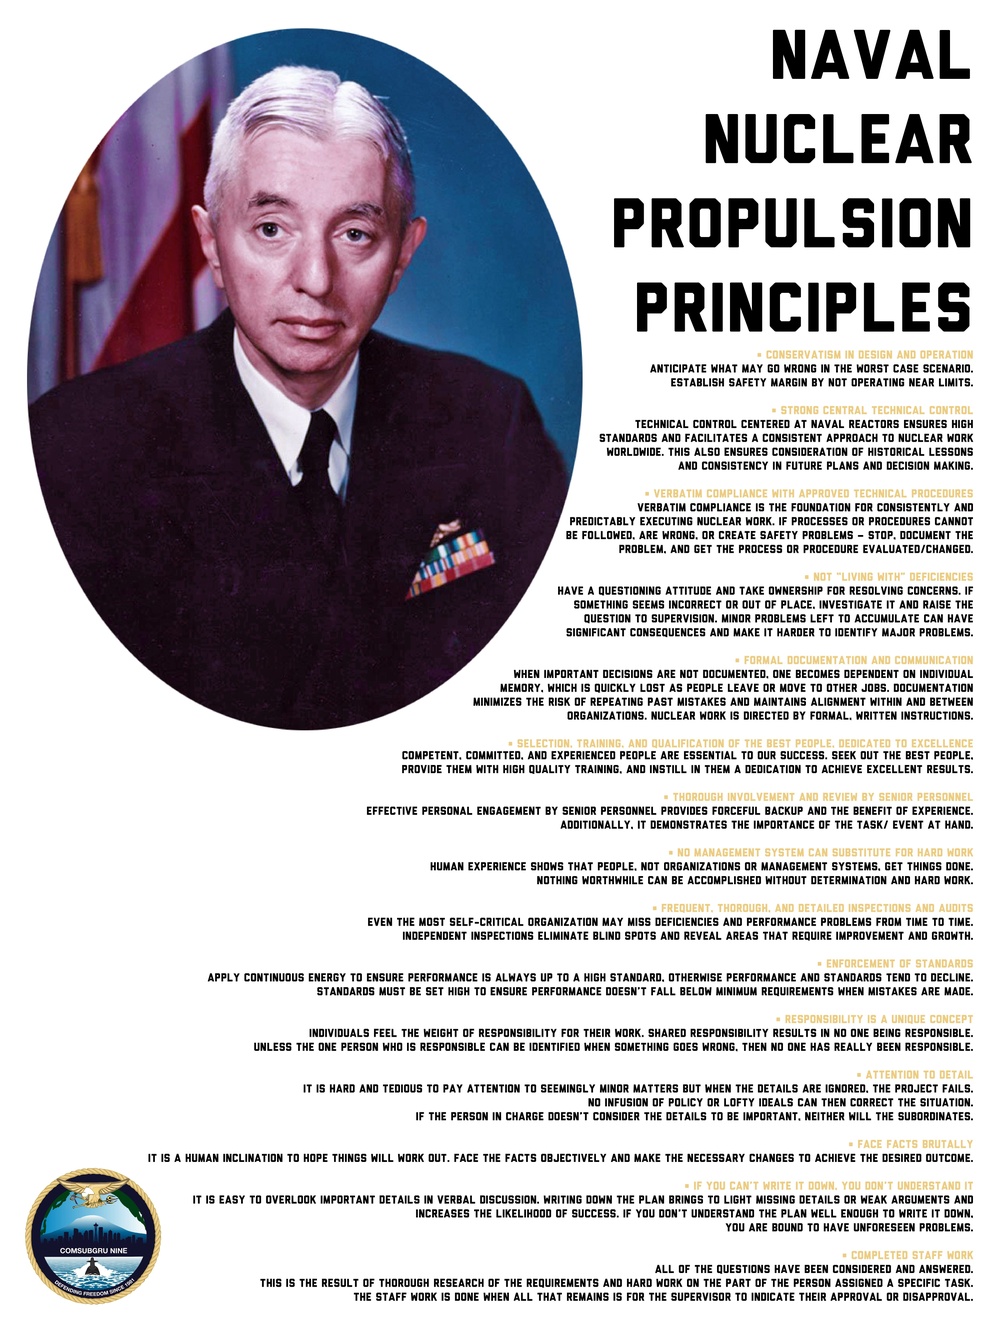 Naval Nuclear Propulsion Program Adm. Rickover Principles